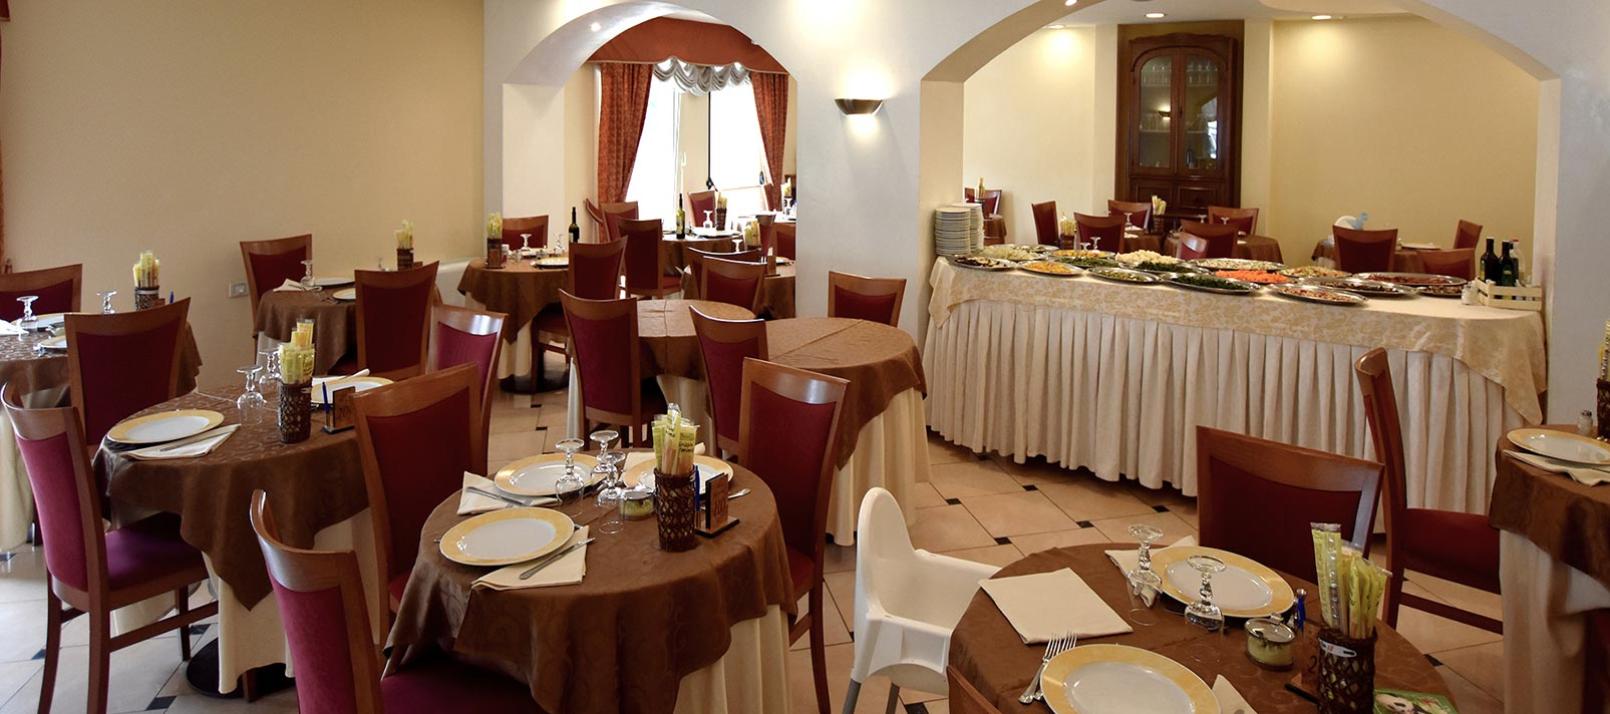 hotelcervia fr hotel-a-cervia-avec-cuisine-traditionnelle 012